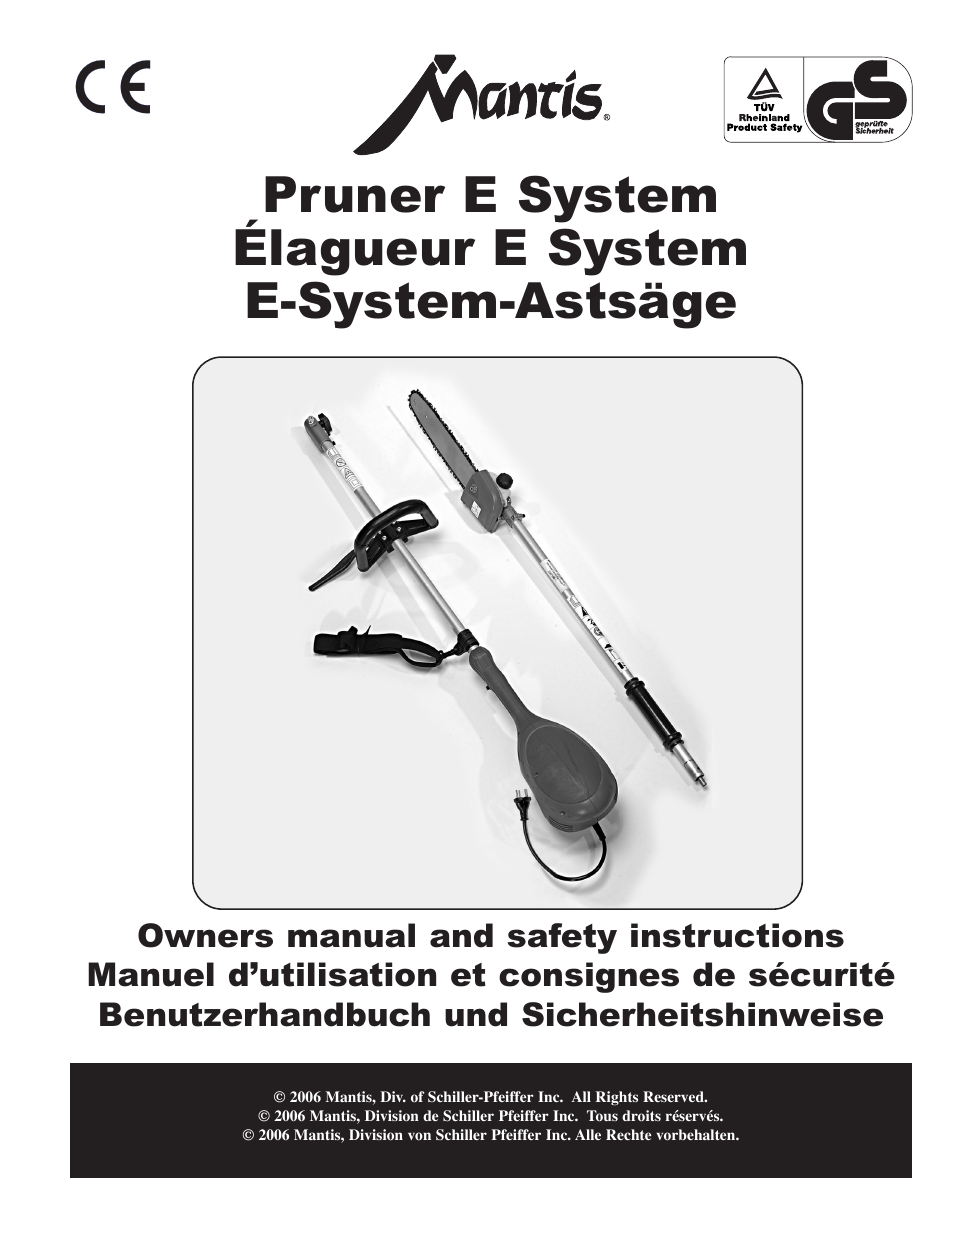 Mantis Pruner E System User Manual | 18 pages